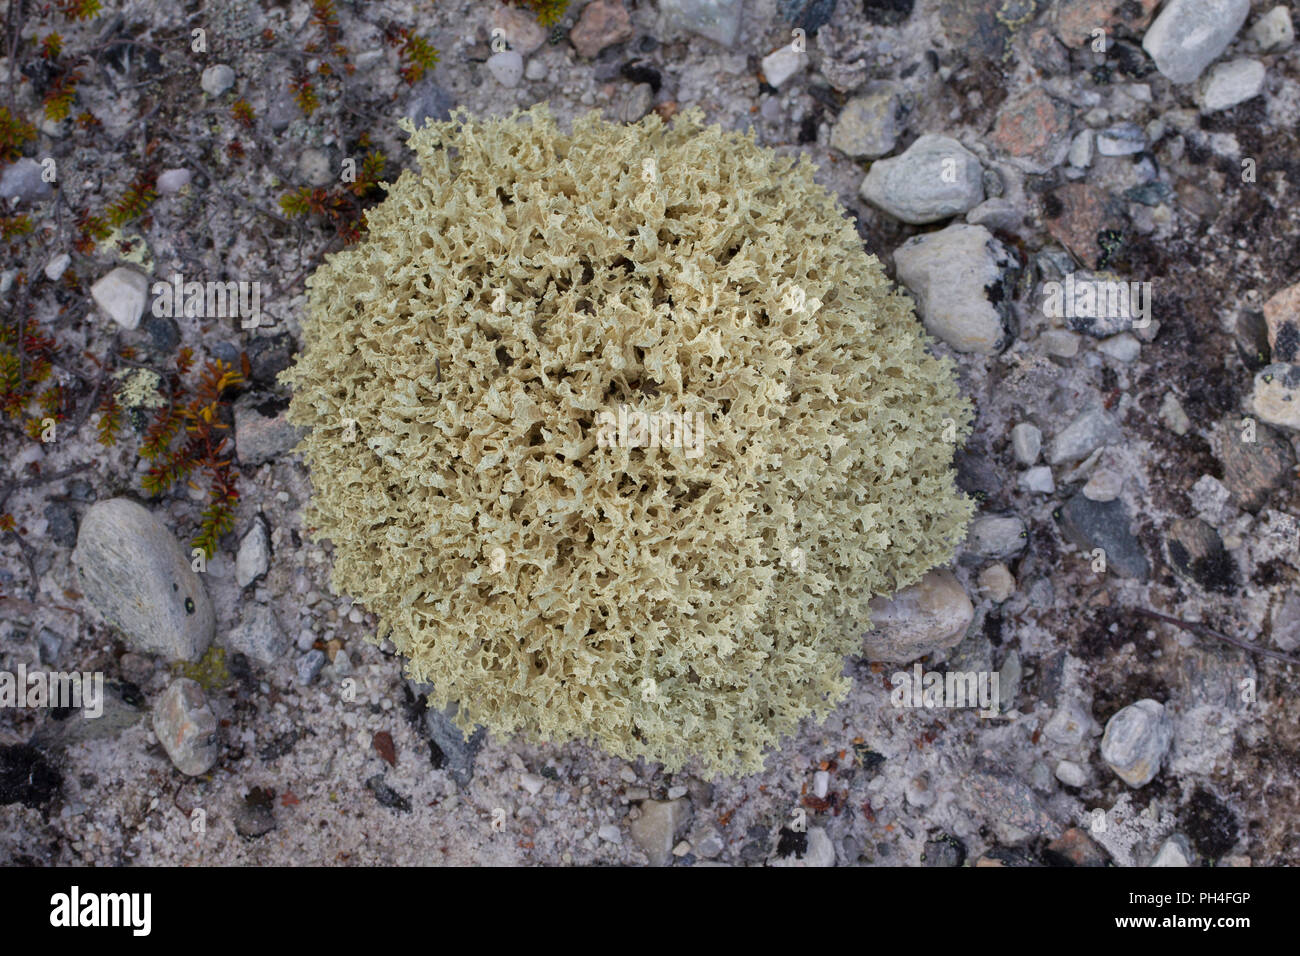 Islanda moss (Cetraria islandica). La Svezia.Islaendisches Moos, Cetraria islandica, Dalarna, Schweden Foto Stock